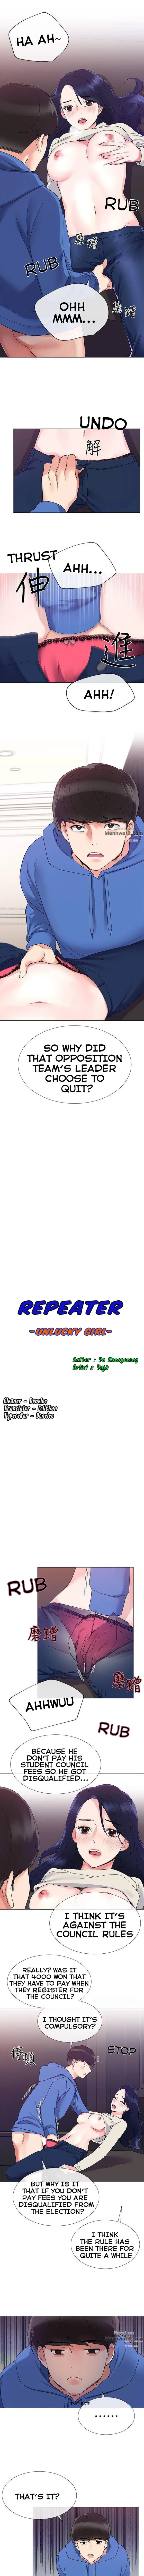 repeater-chap-11-0